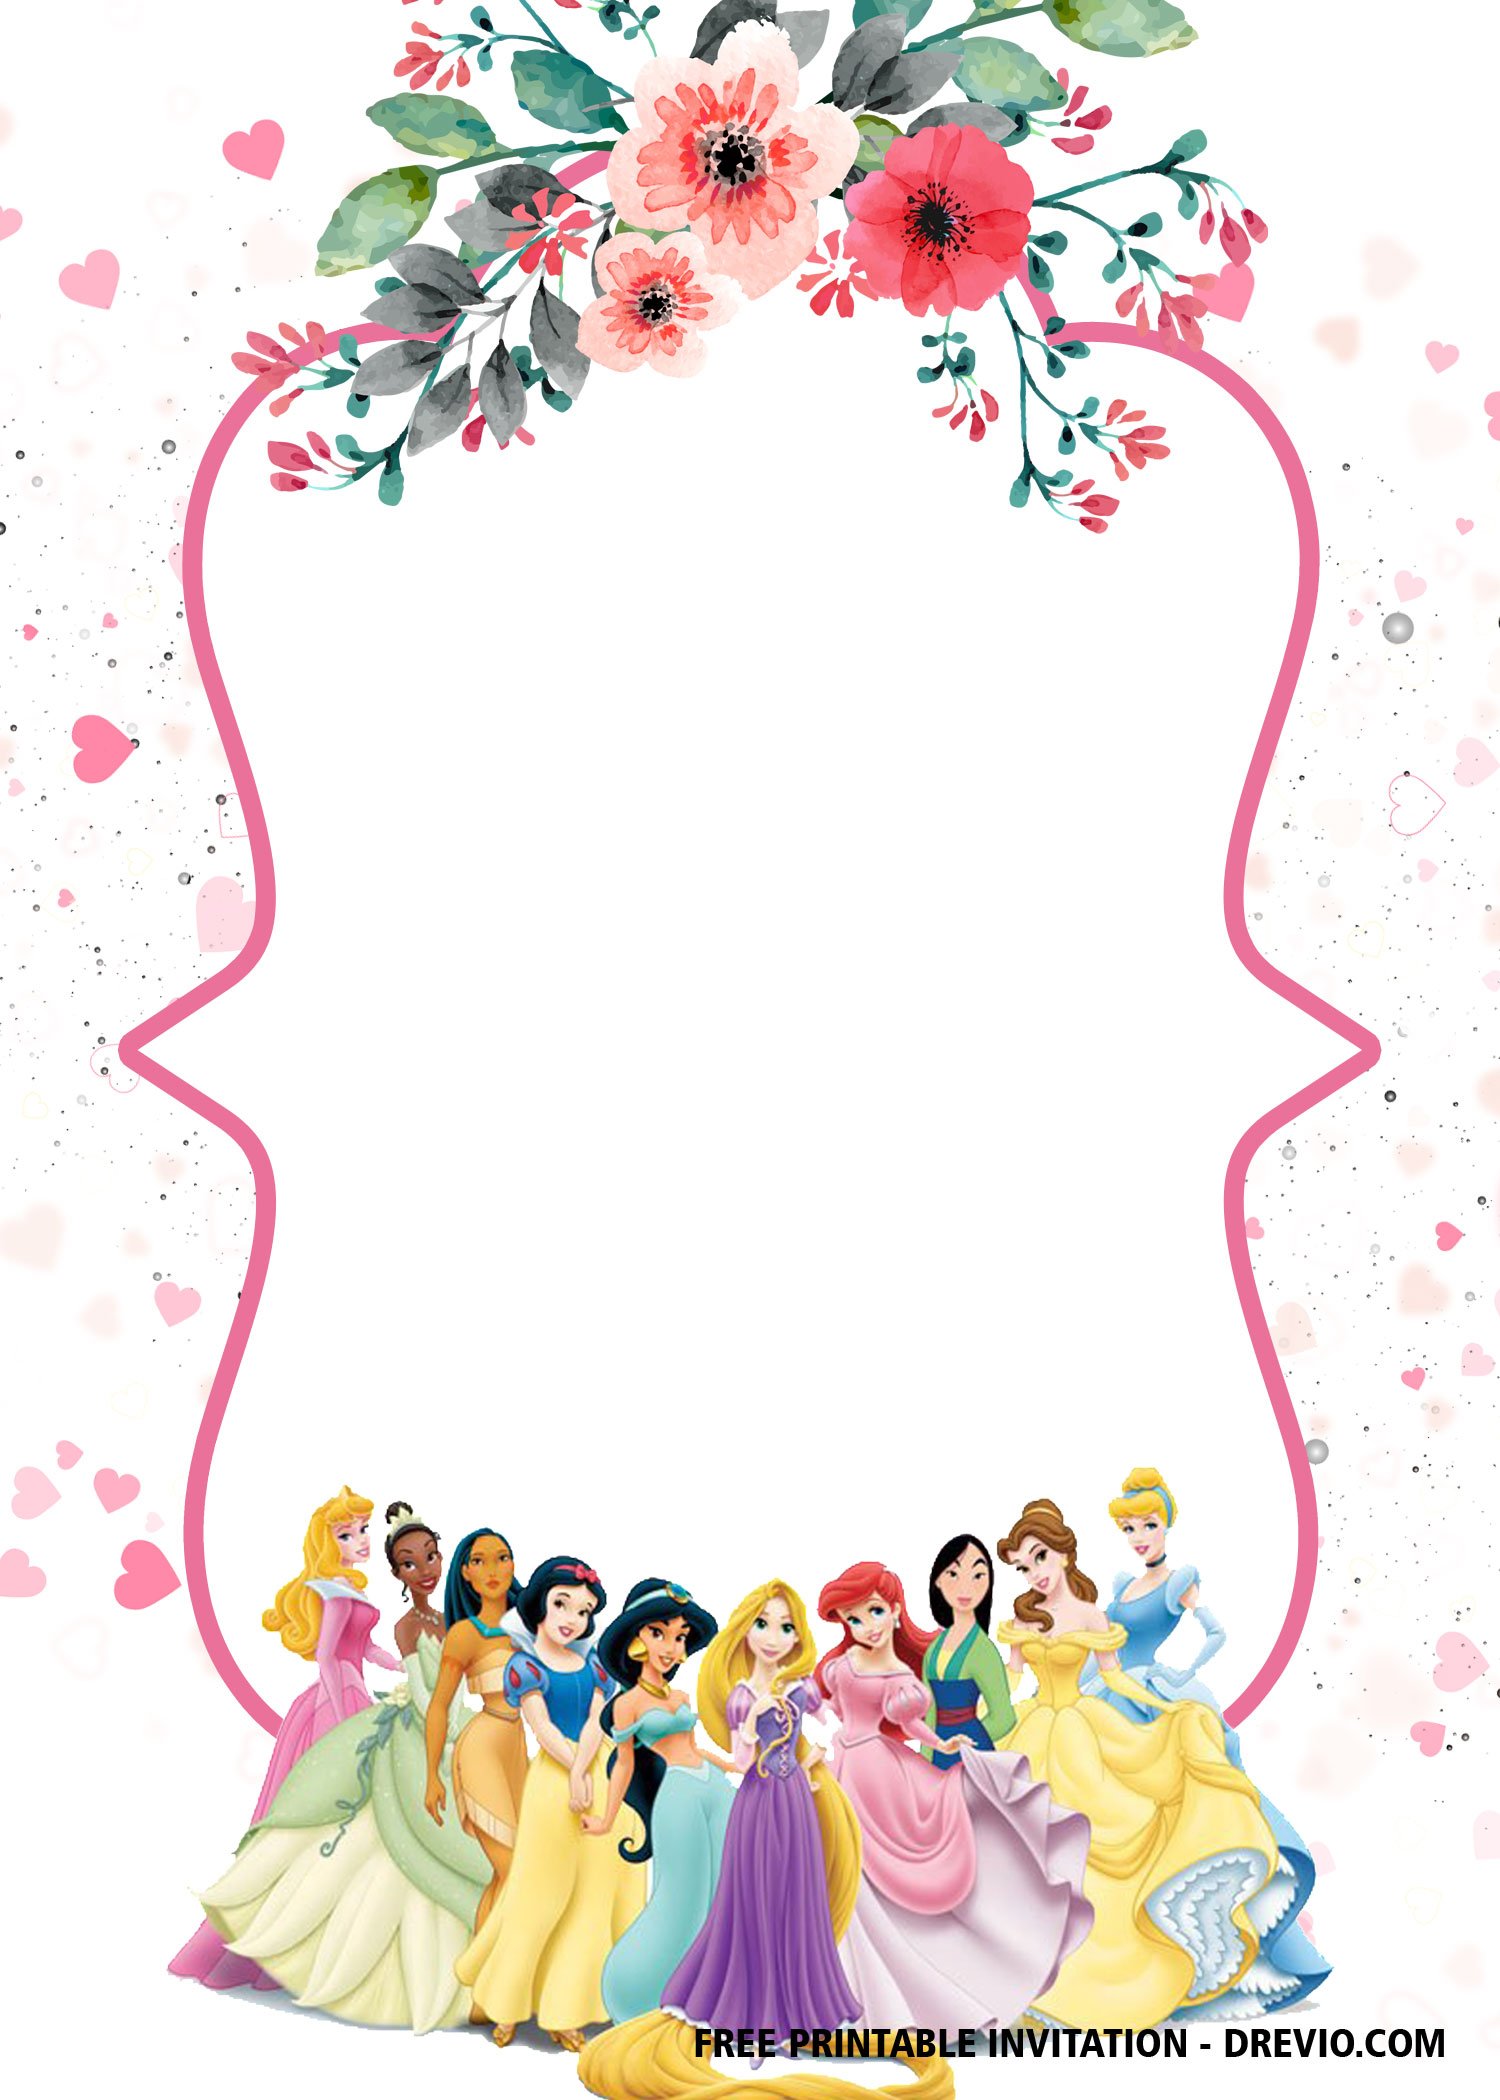 golden-disney-princesses-invitation-template-free-printable-birthday